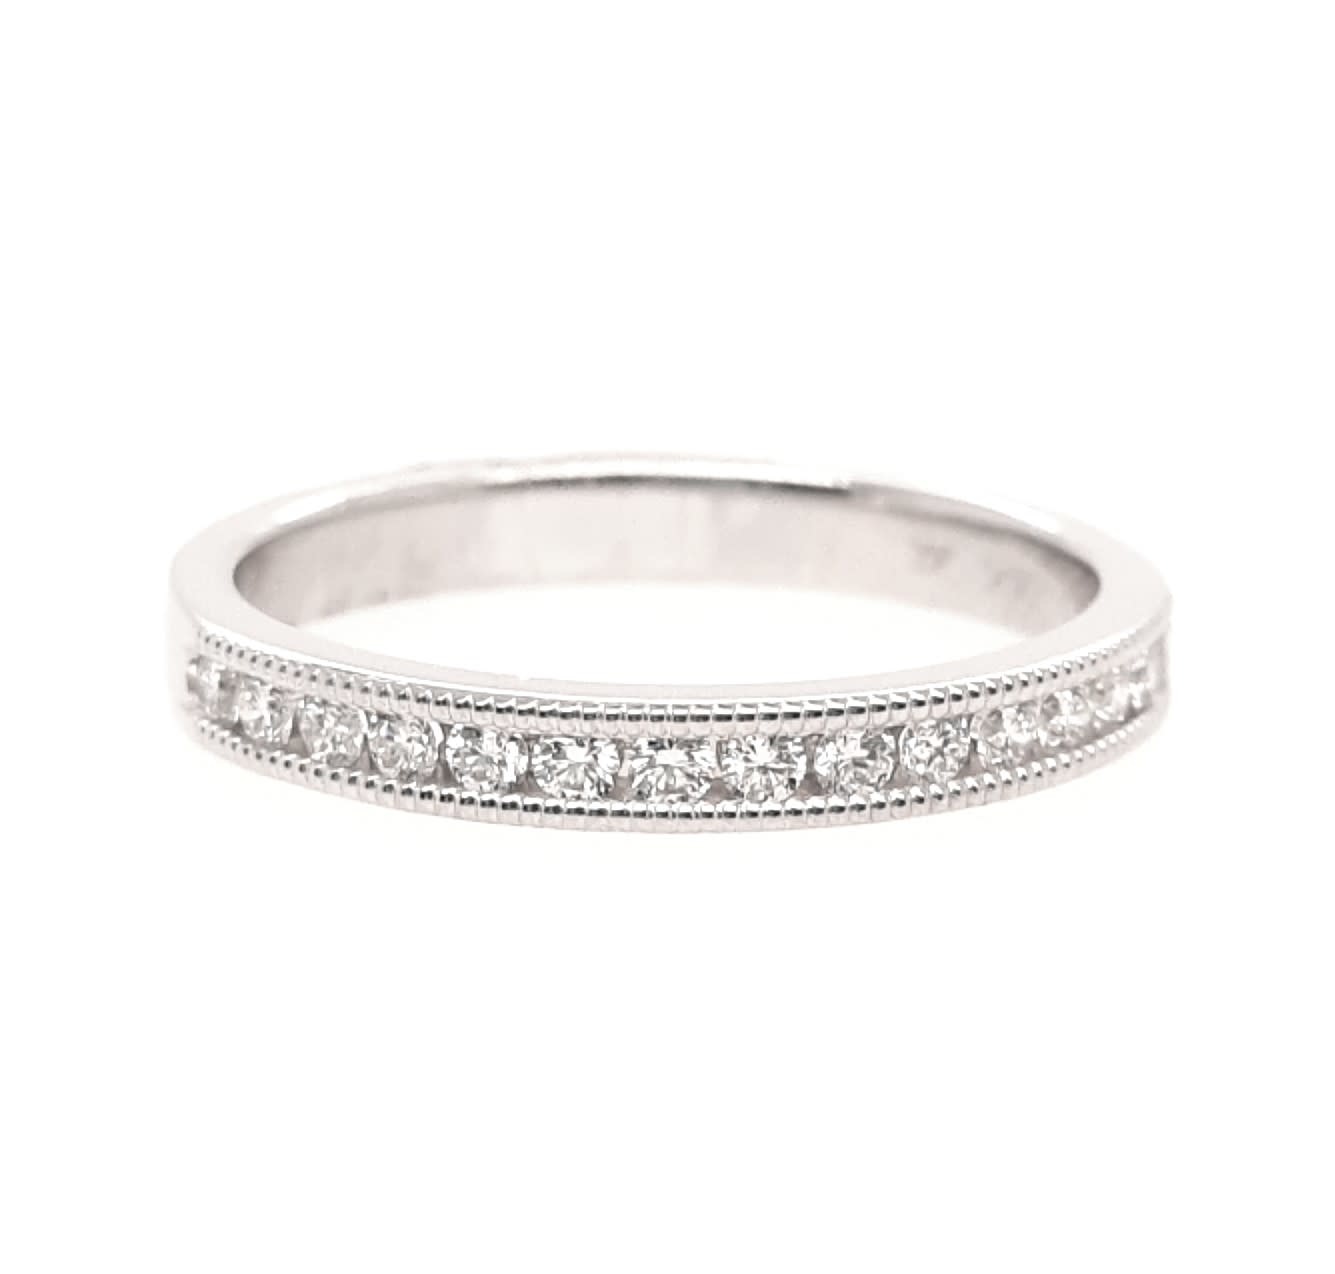 10k White Gold 1/4 Carat T.W. Diamond Channel Set Wedding Ring